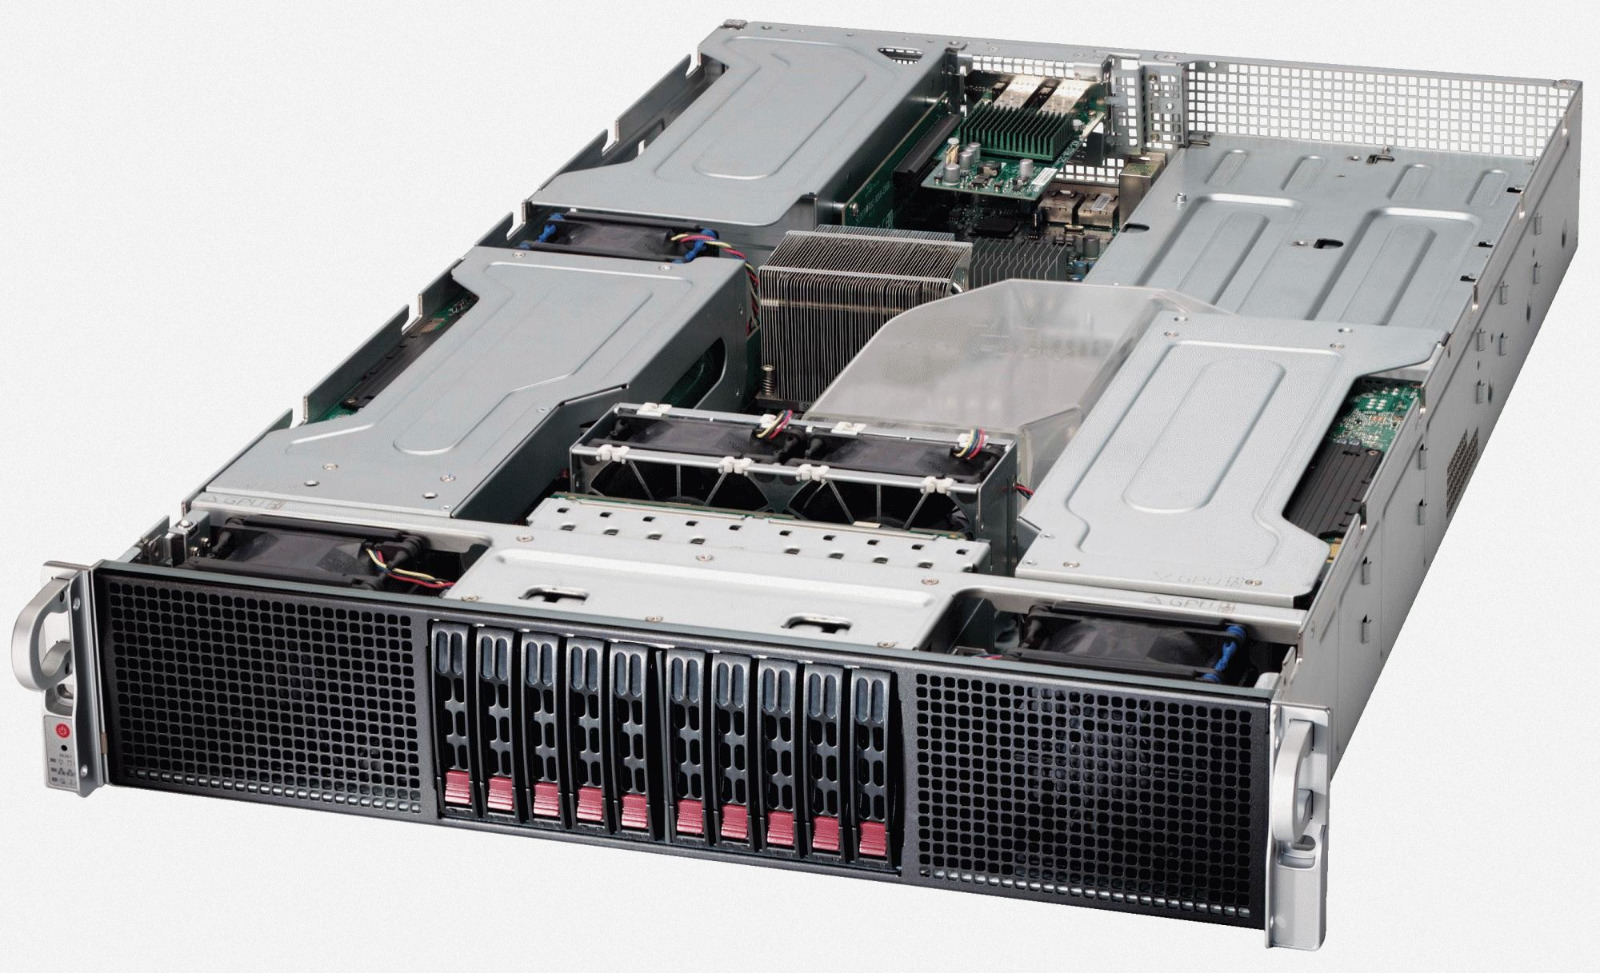 Supermicro SYS-2027GR-TRFHT GPU Barebones Server X9DRG-HTF NEW IN STOCK 5 Yr Wty